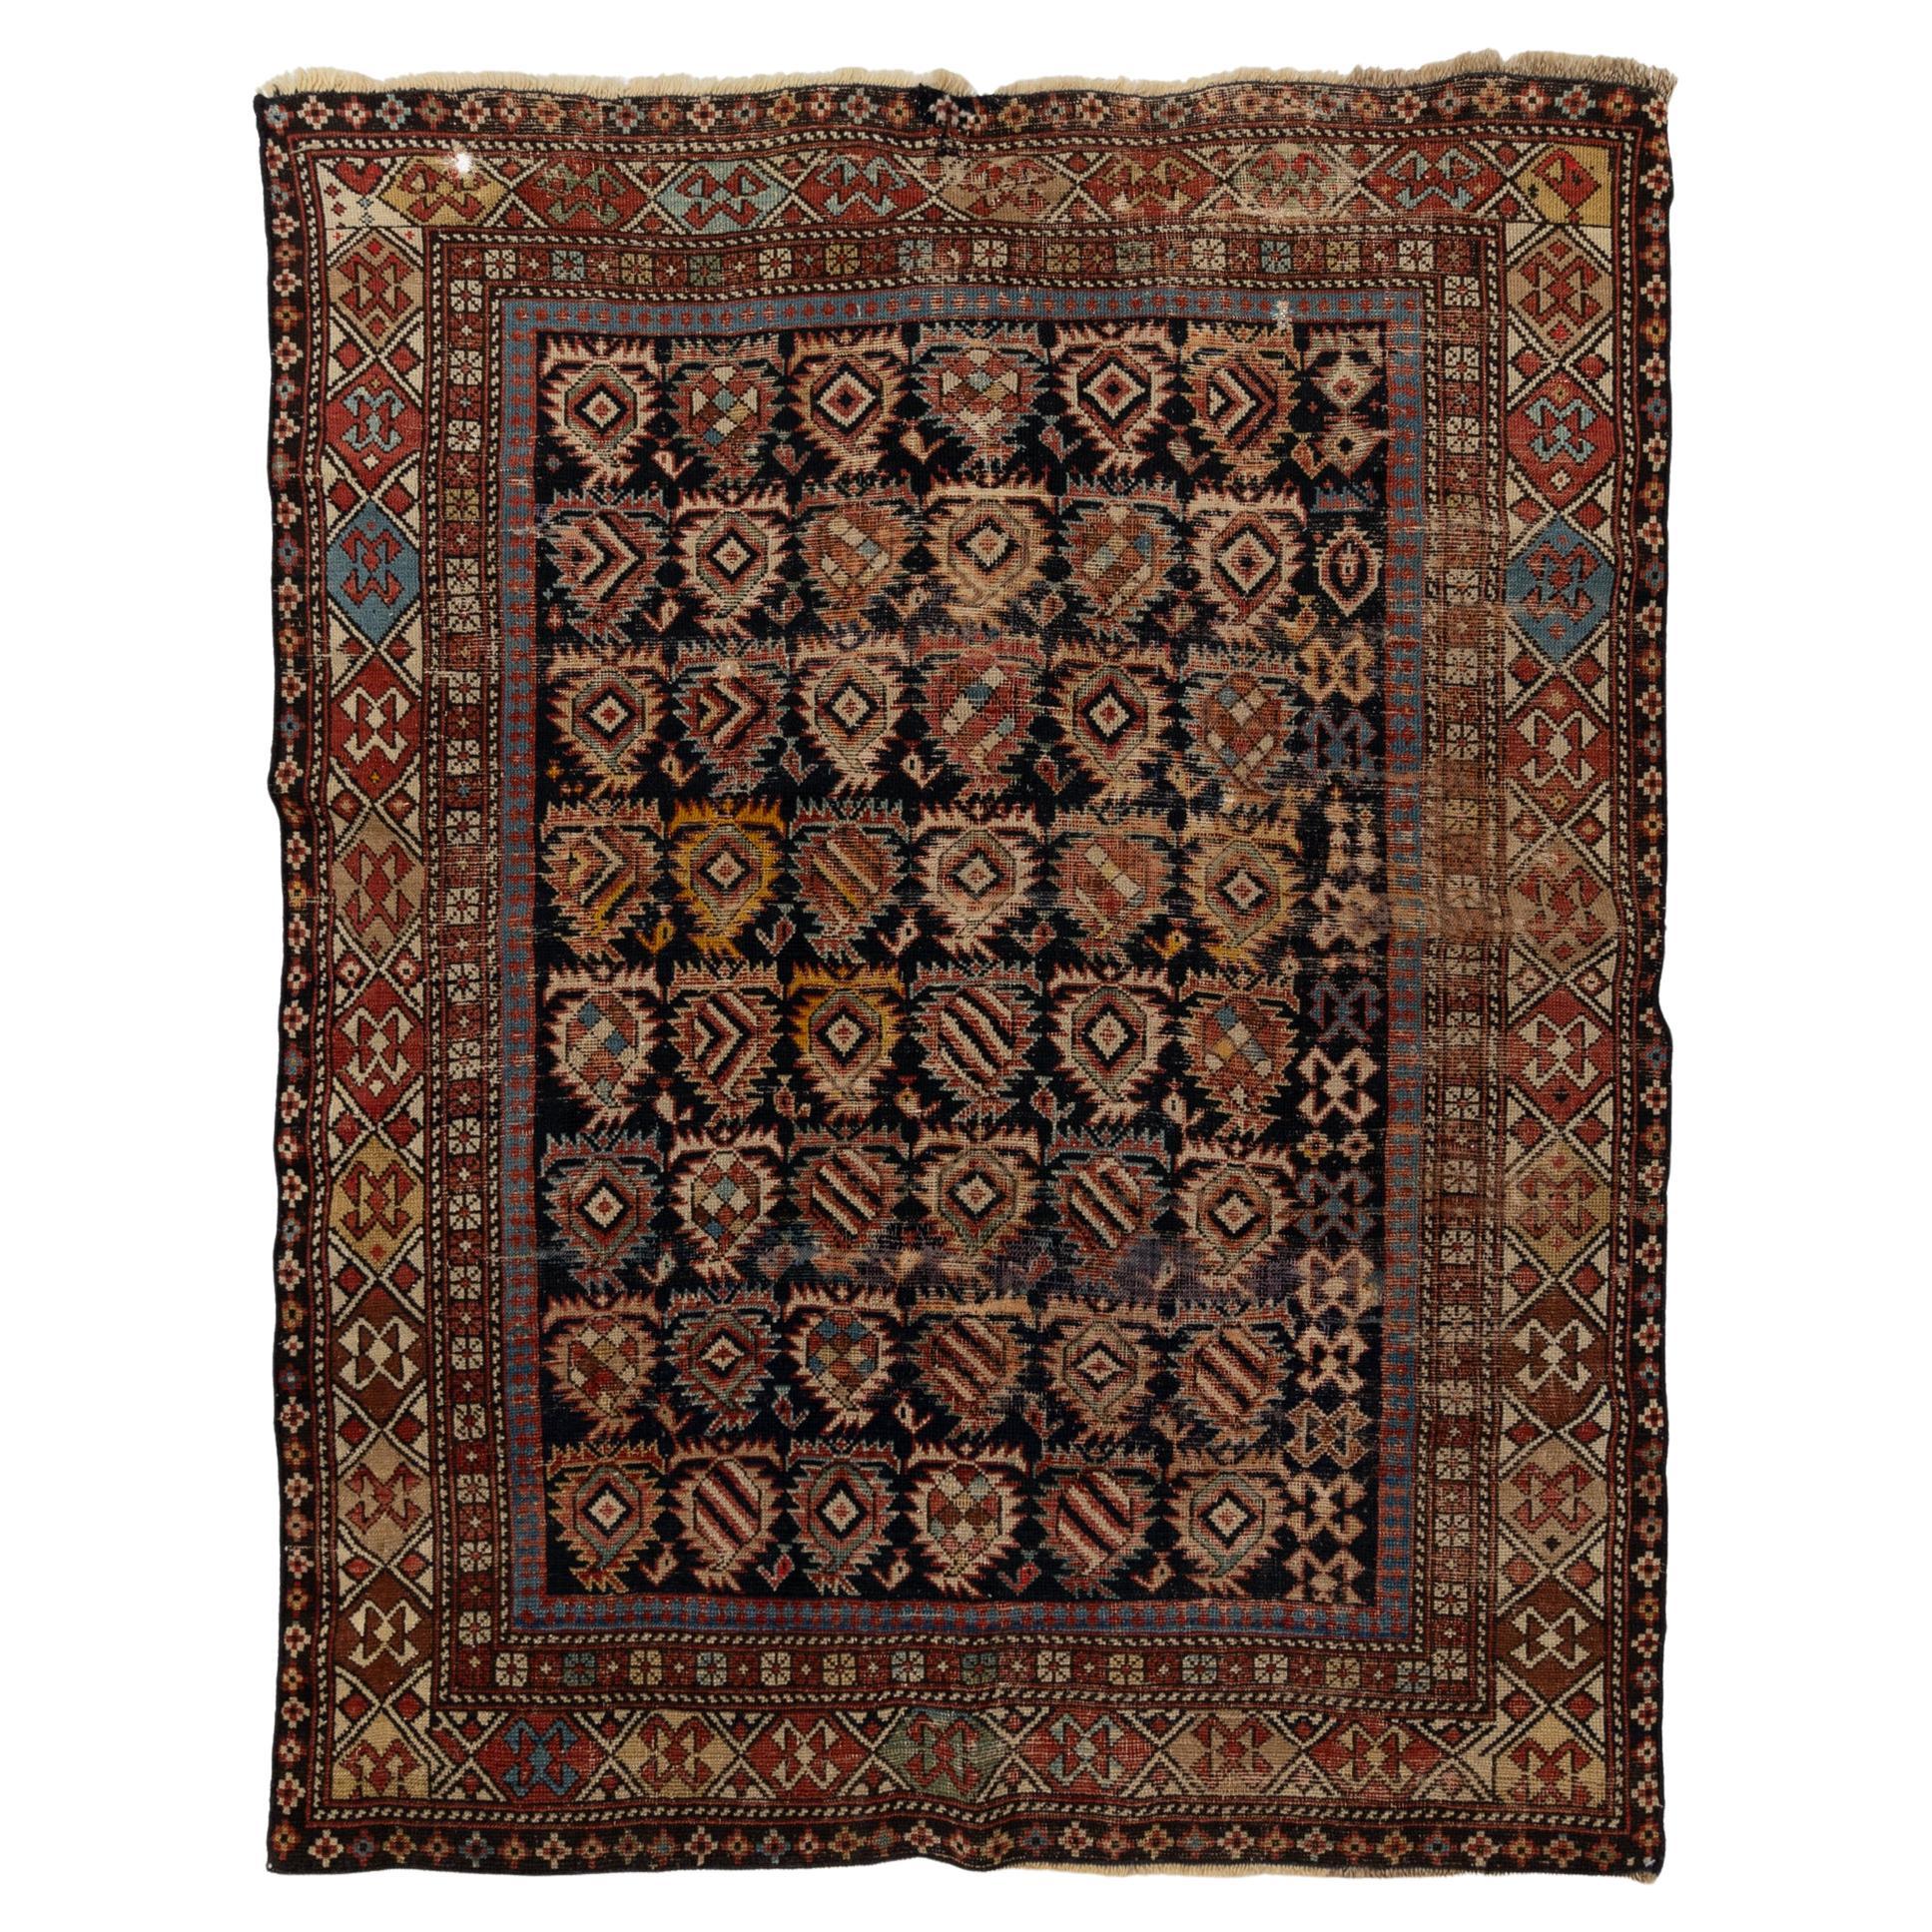 Antique Persian Kazak Rug